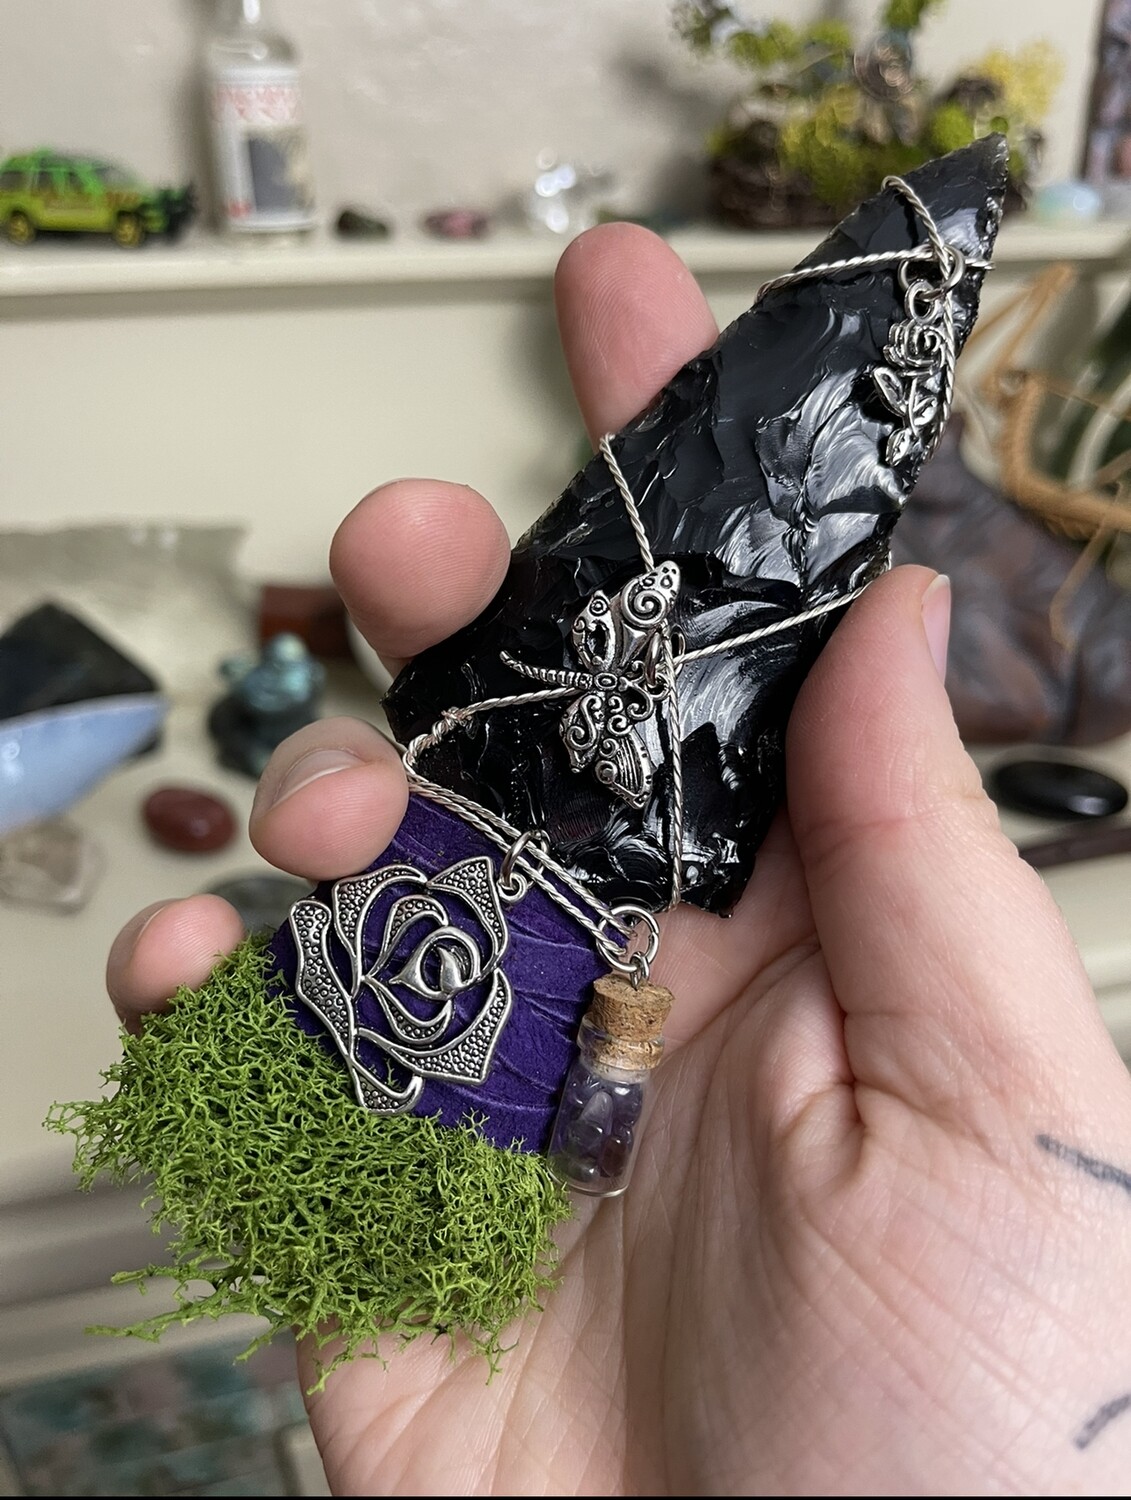 6-inch Knapped Obsidian Dagger with Amethyst